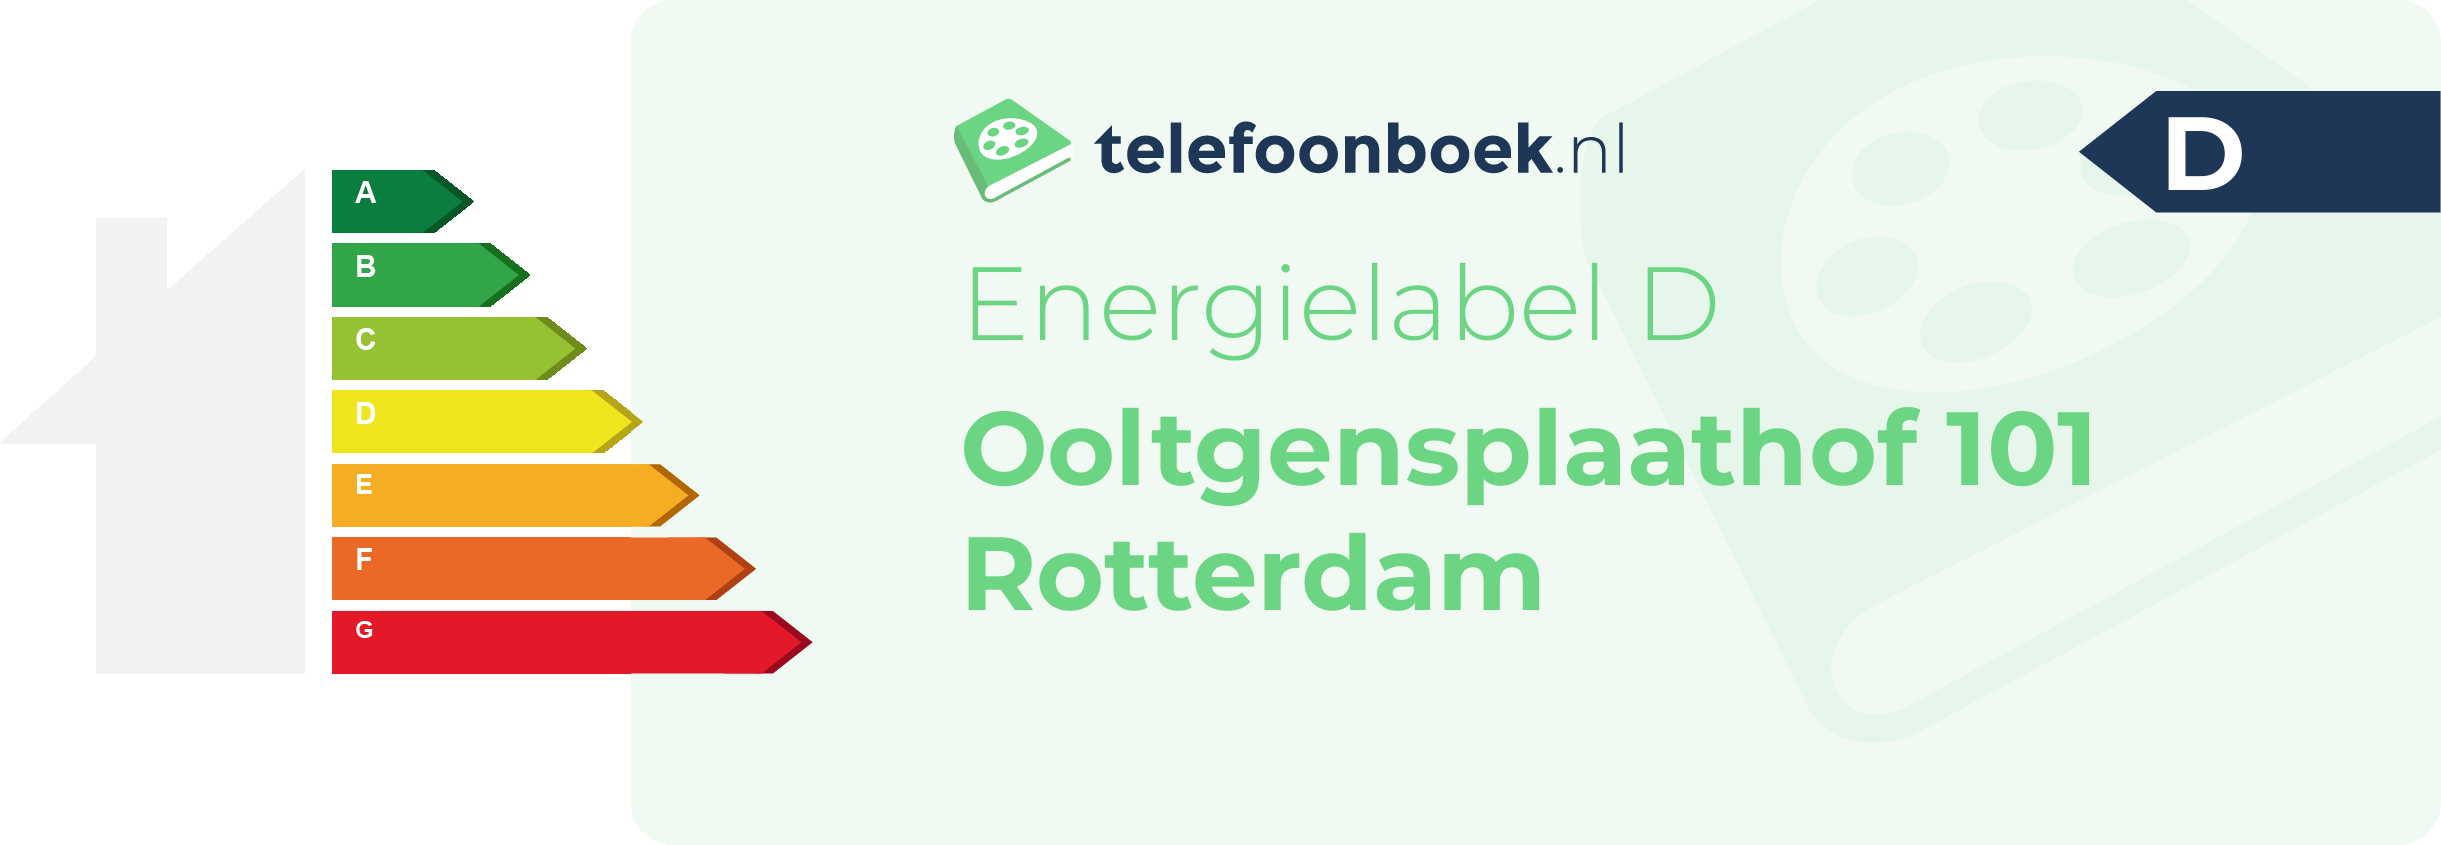 Energielabel Ooltgensplaathof 101 Rotterdam